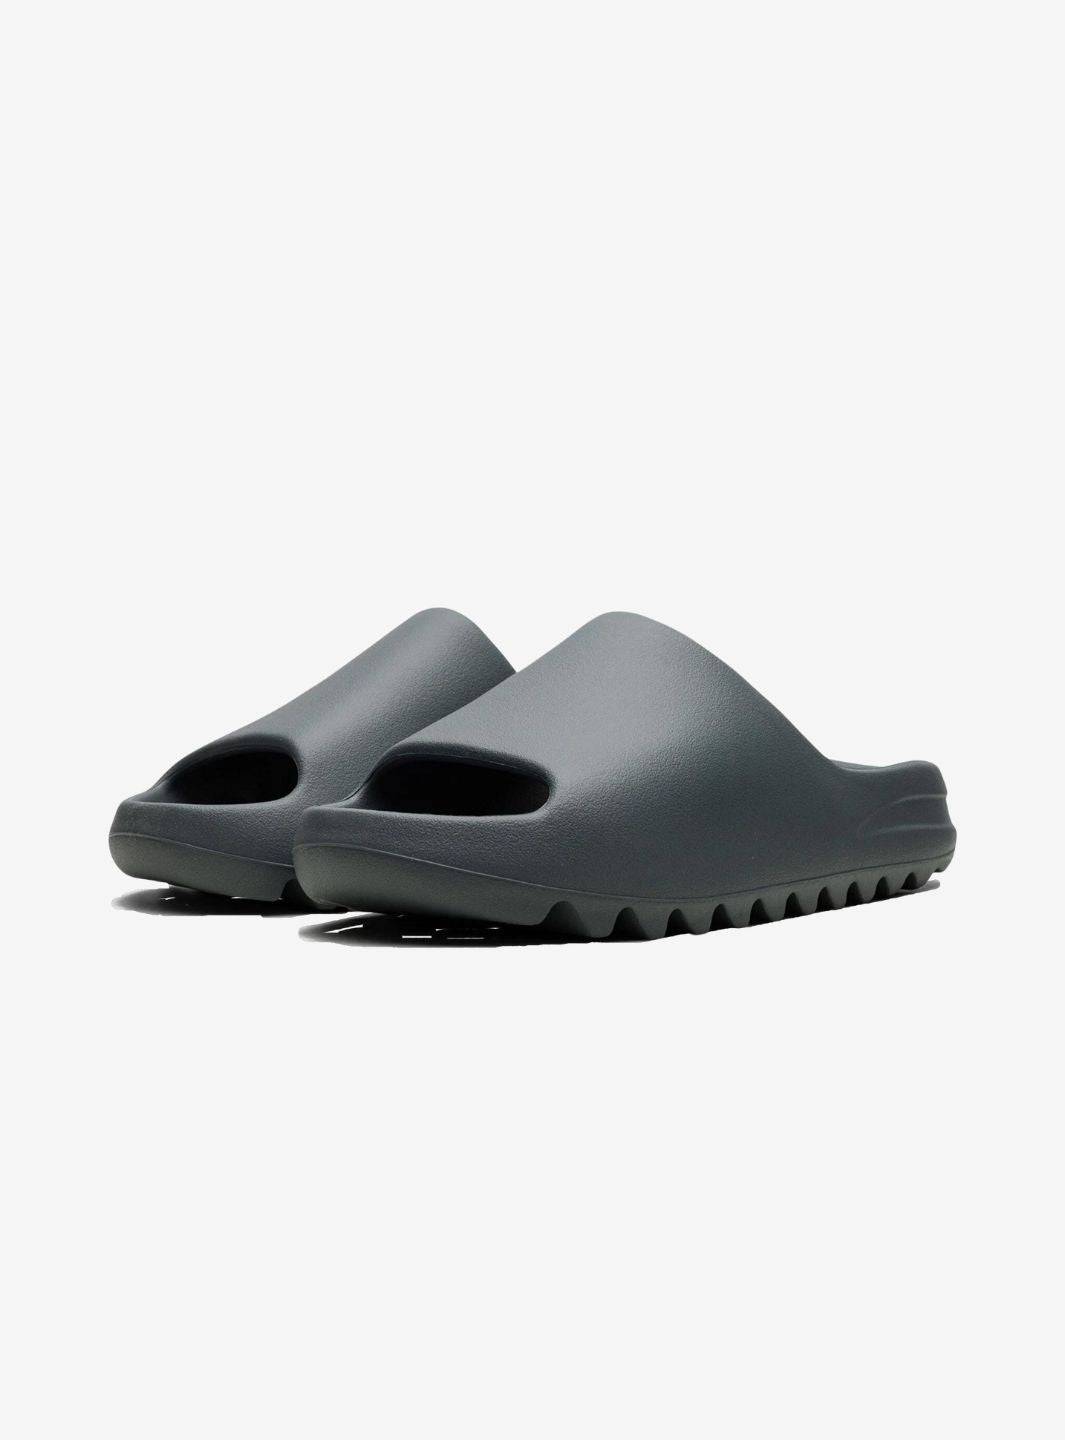 Adidas Yeezy Slide Slate Marine - ID2350 | ResellZone